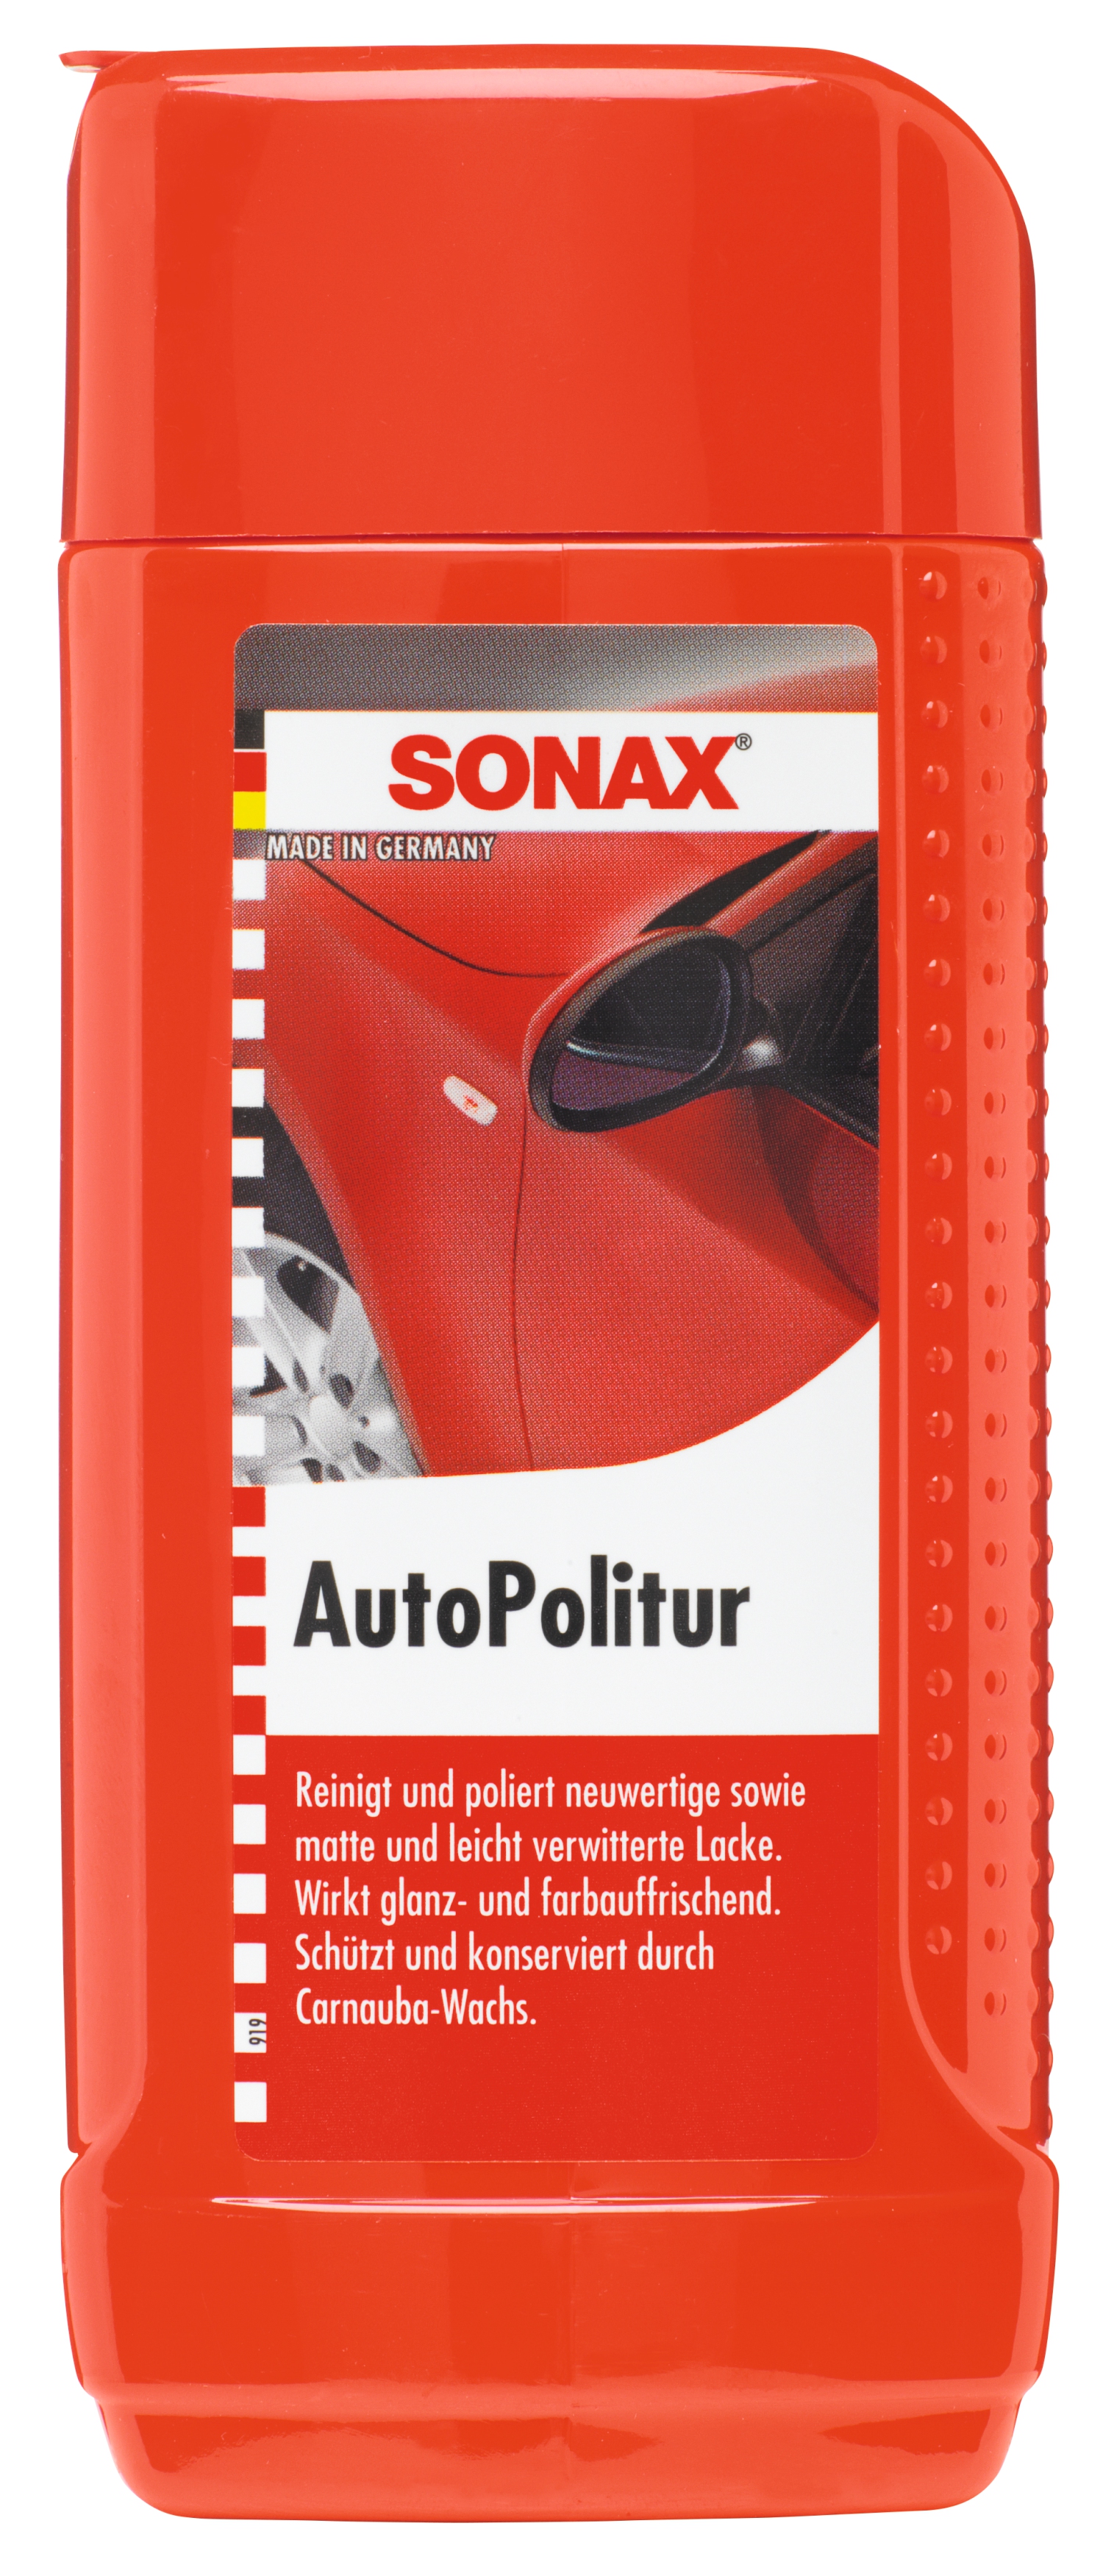 Sonax Auto Winterset mit Autobahnvignette 2024